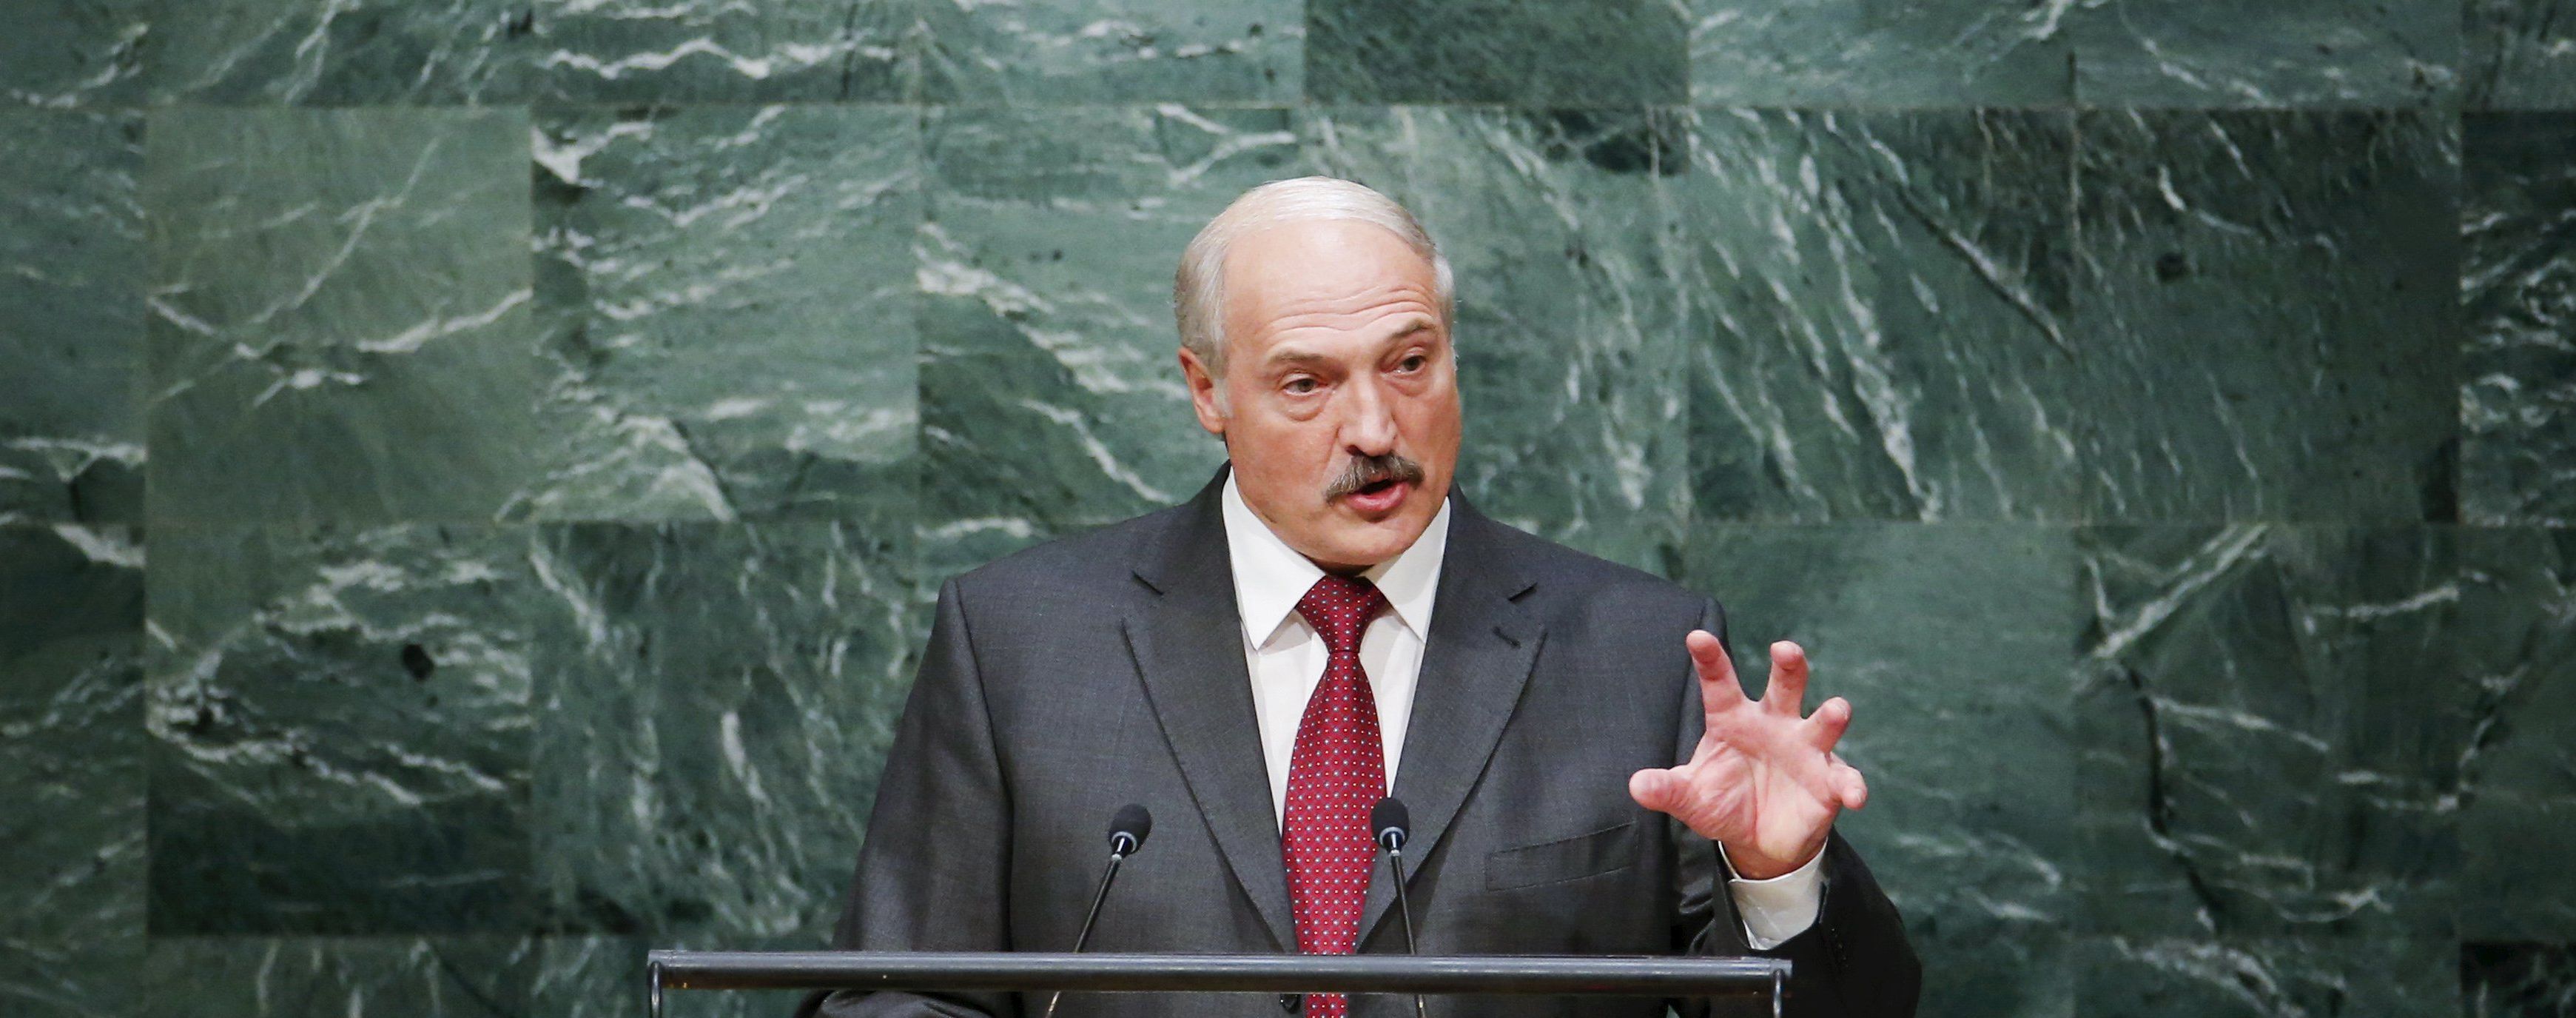 Евросоюз отменит санкции против Беларуси